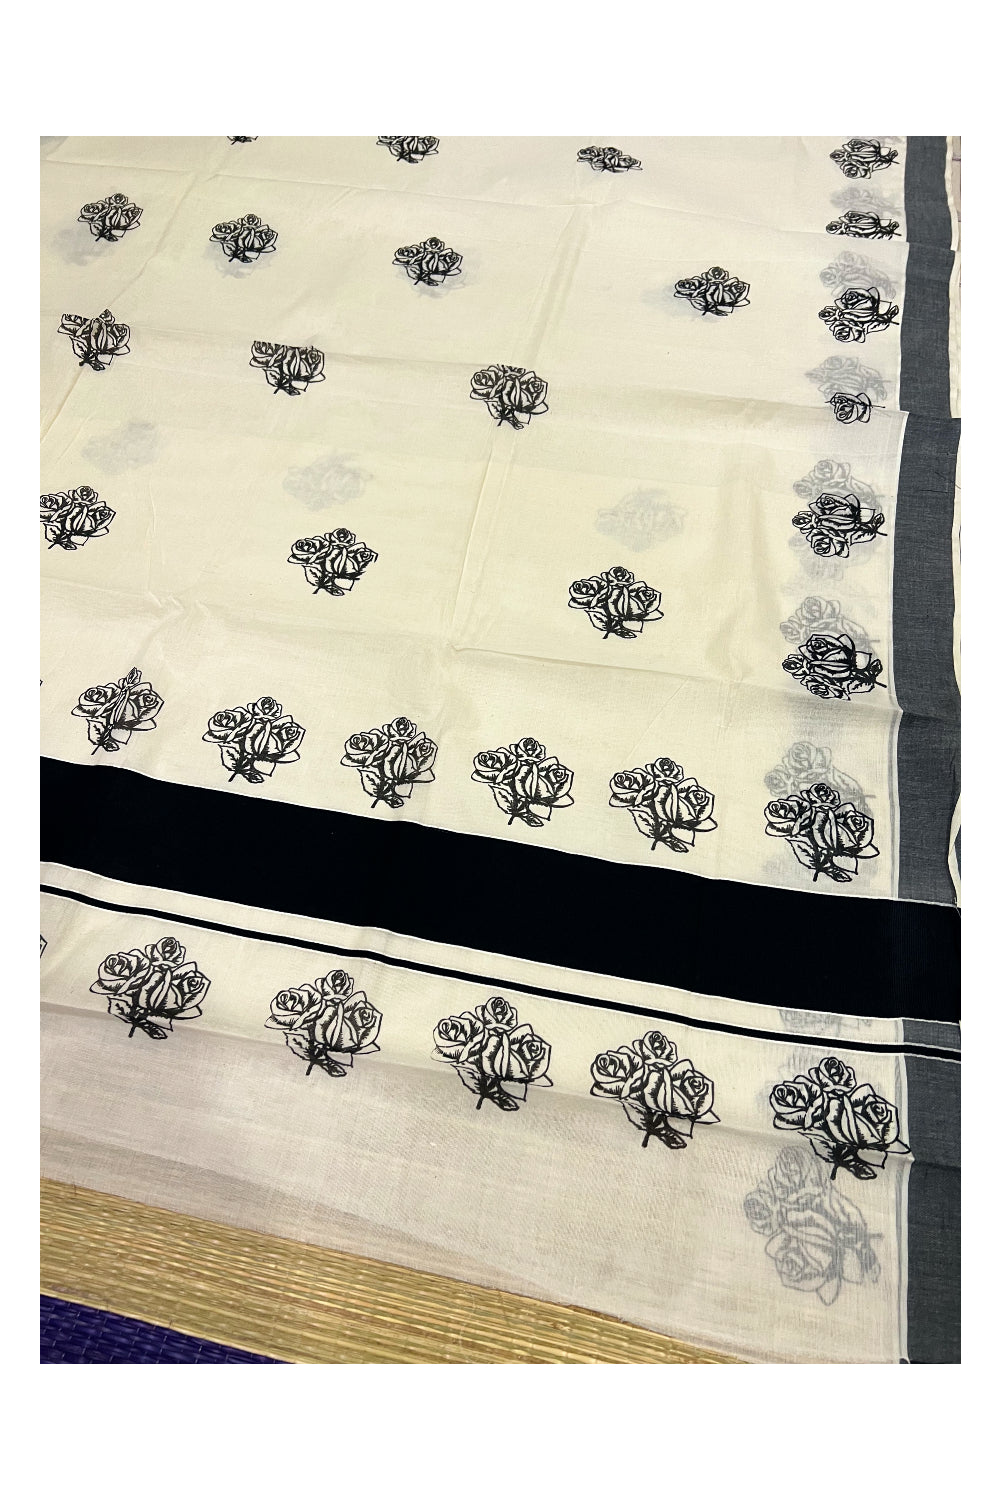 Pure Cotton Kerala Saree with Black Floral Block Prints on Border